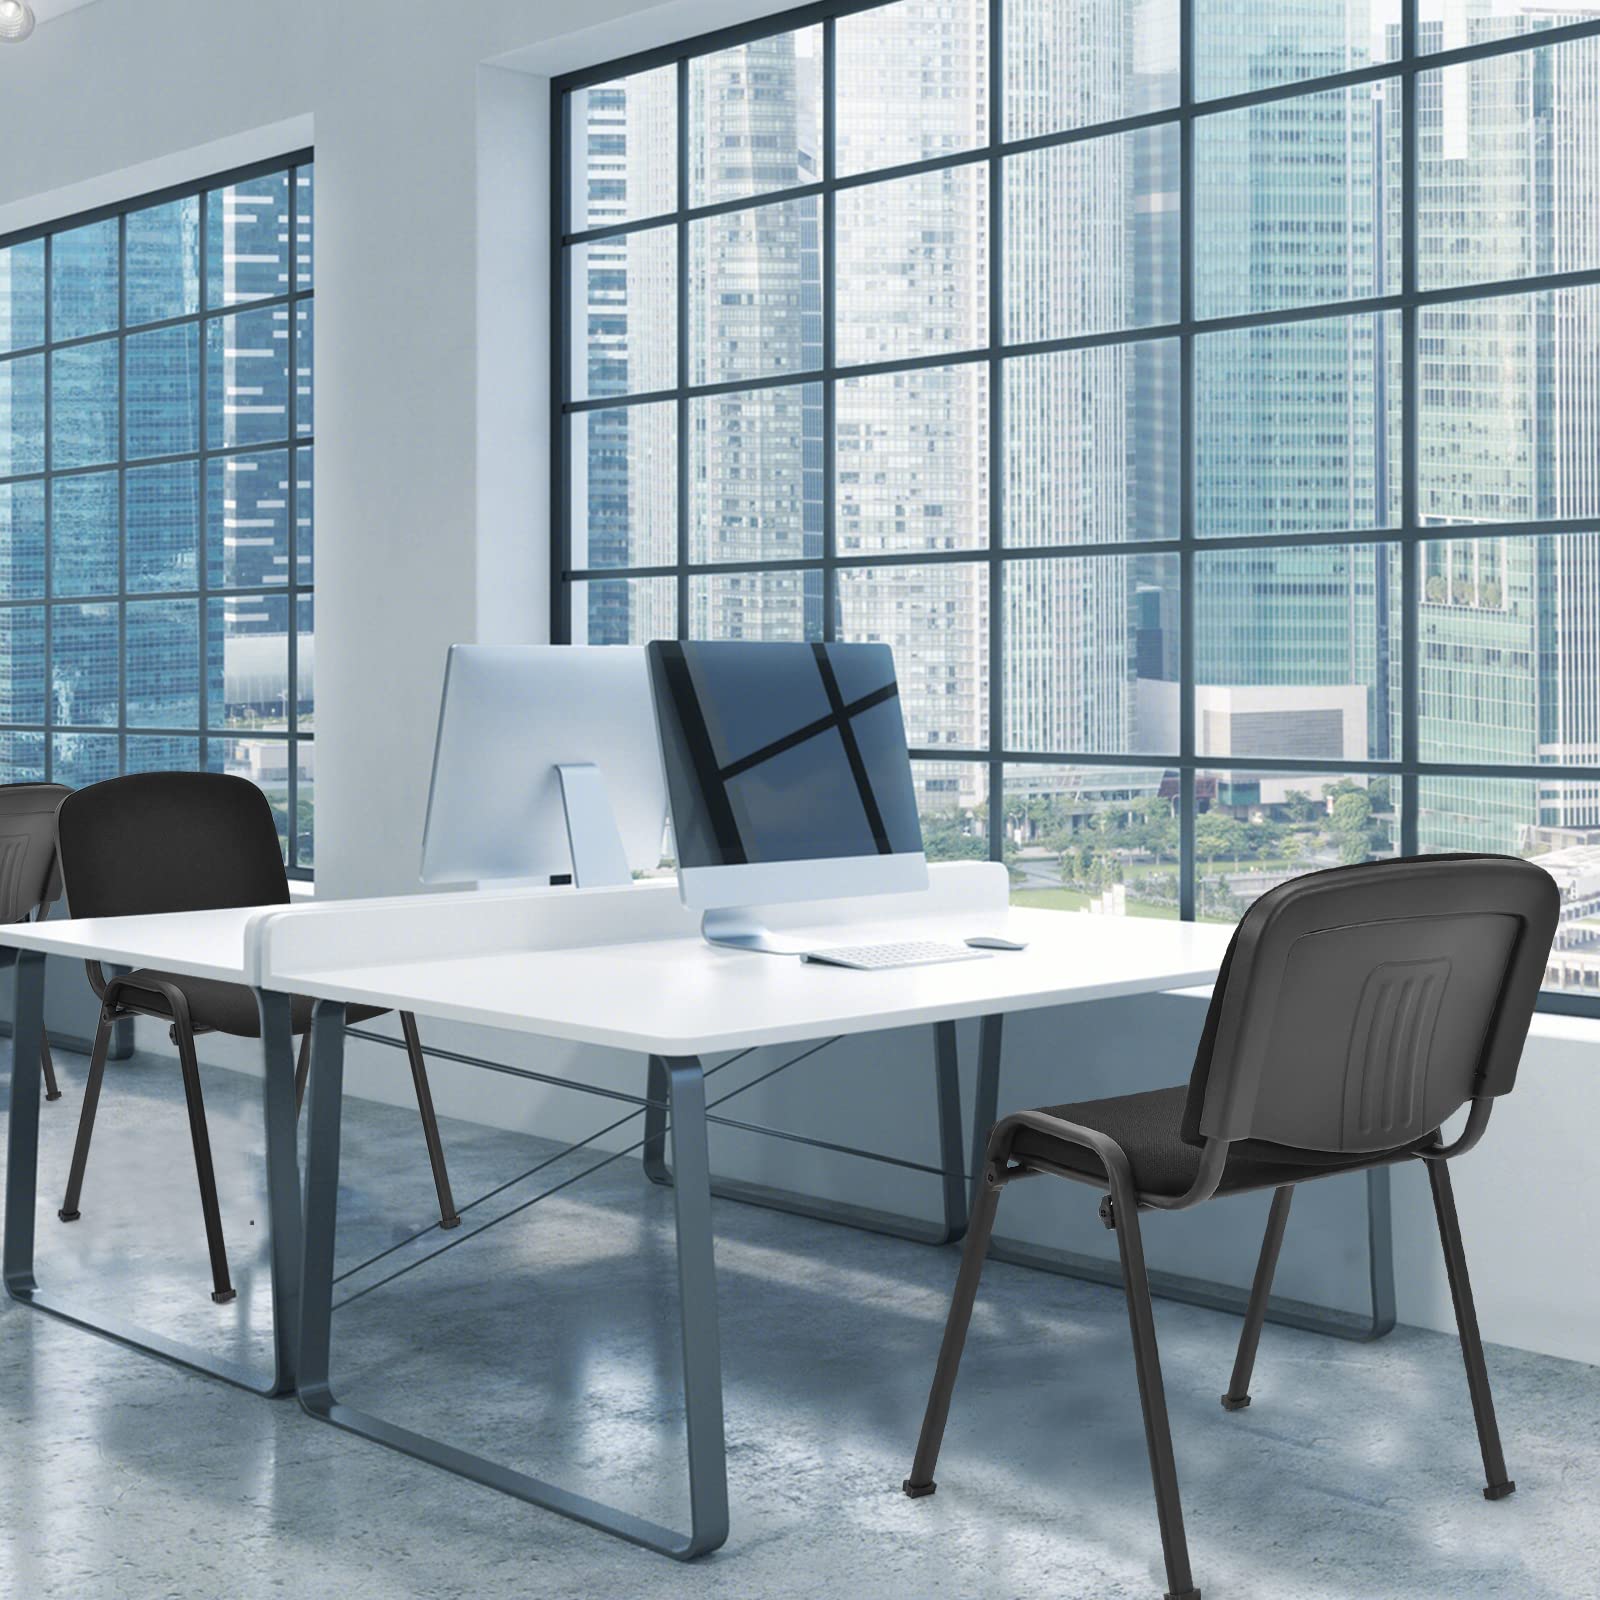 Set of 5 Conference Chair Elegant Design Stackable Office